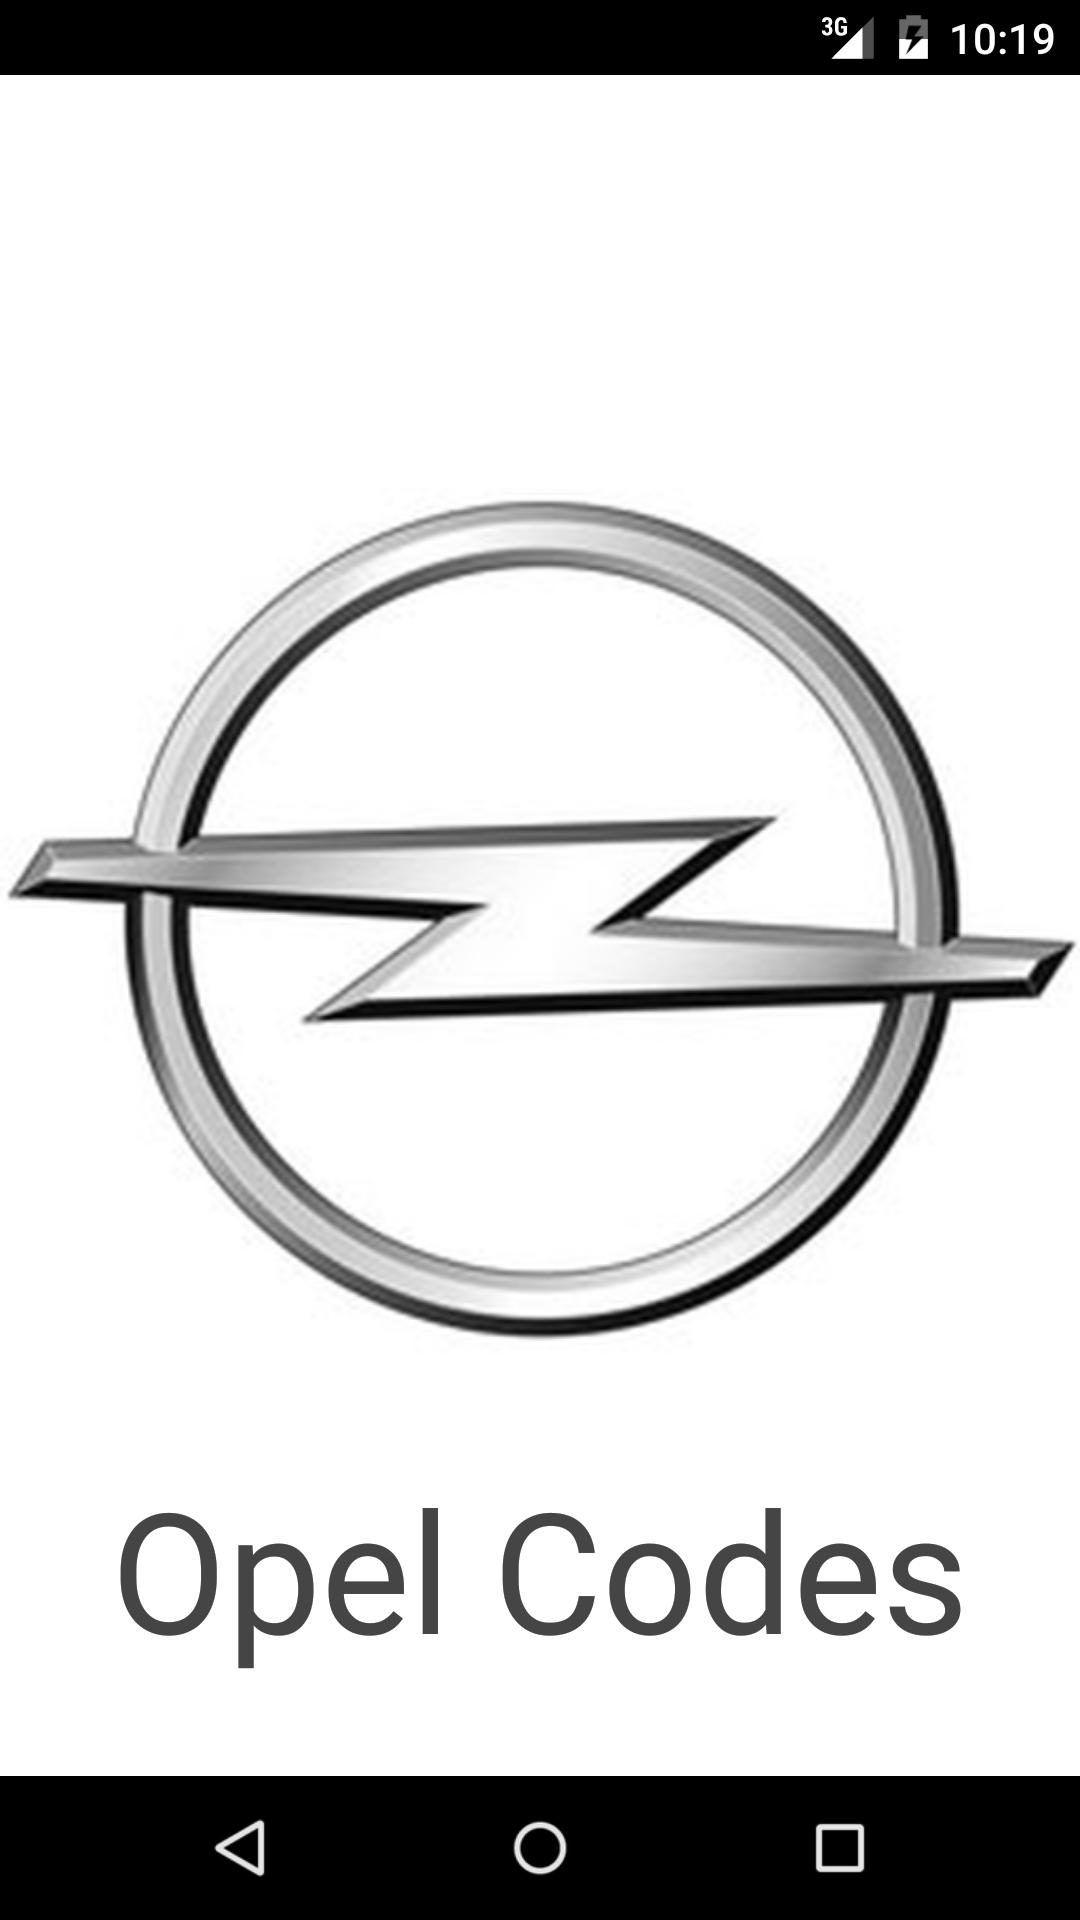 Opel logo. Код 16 Опель. Логотип Опель для магнитолы андроид. Опель код 3.